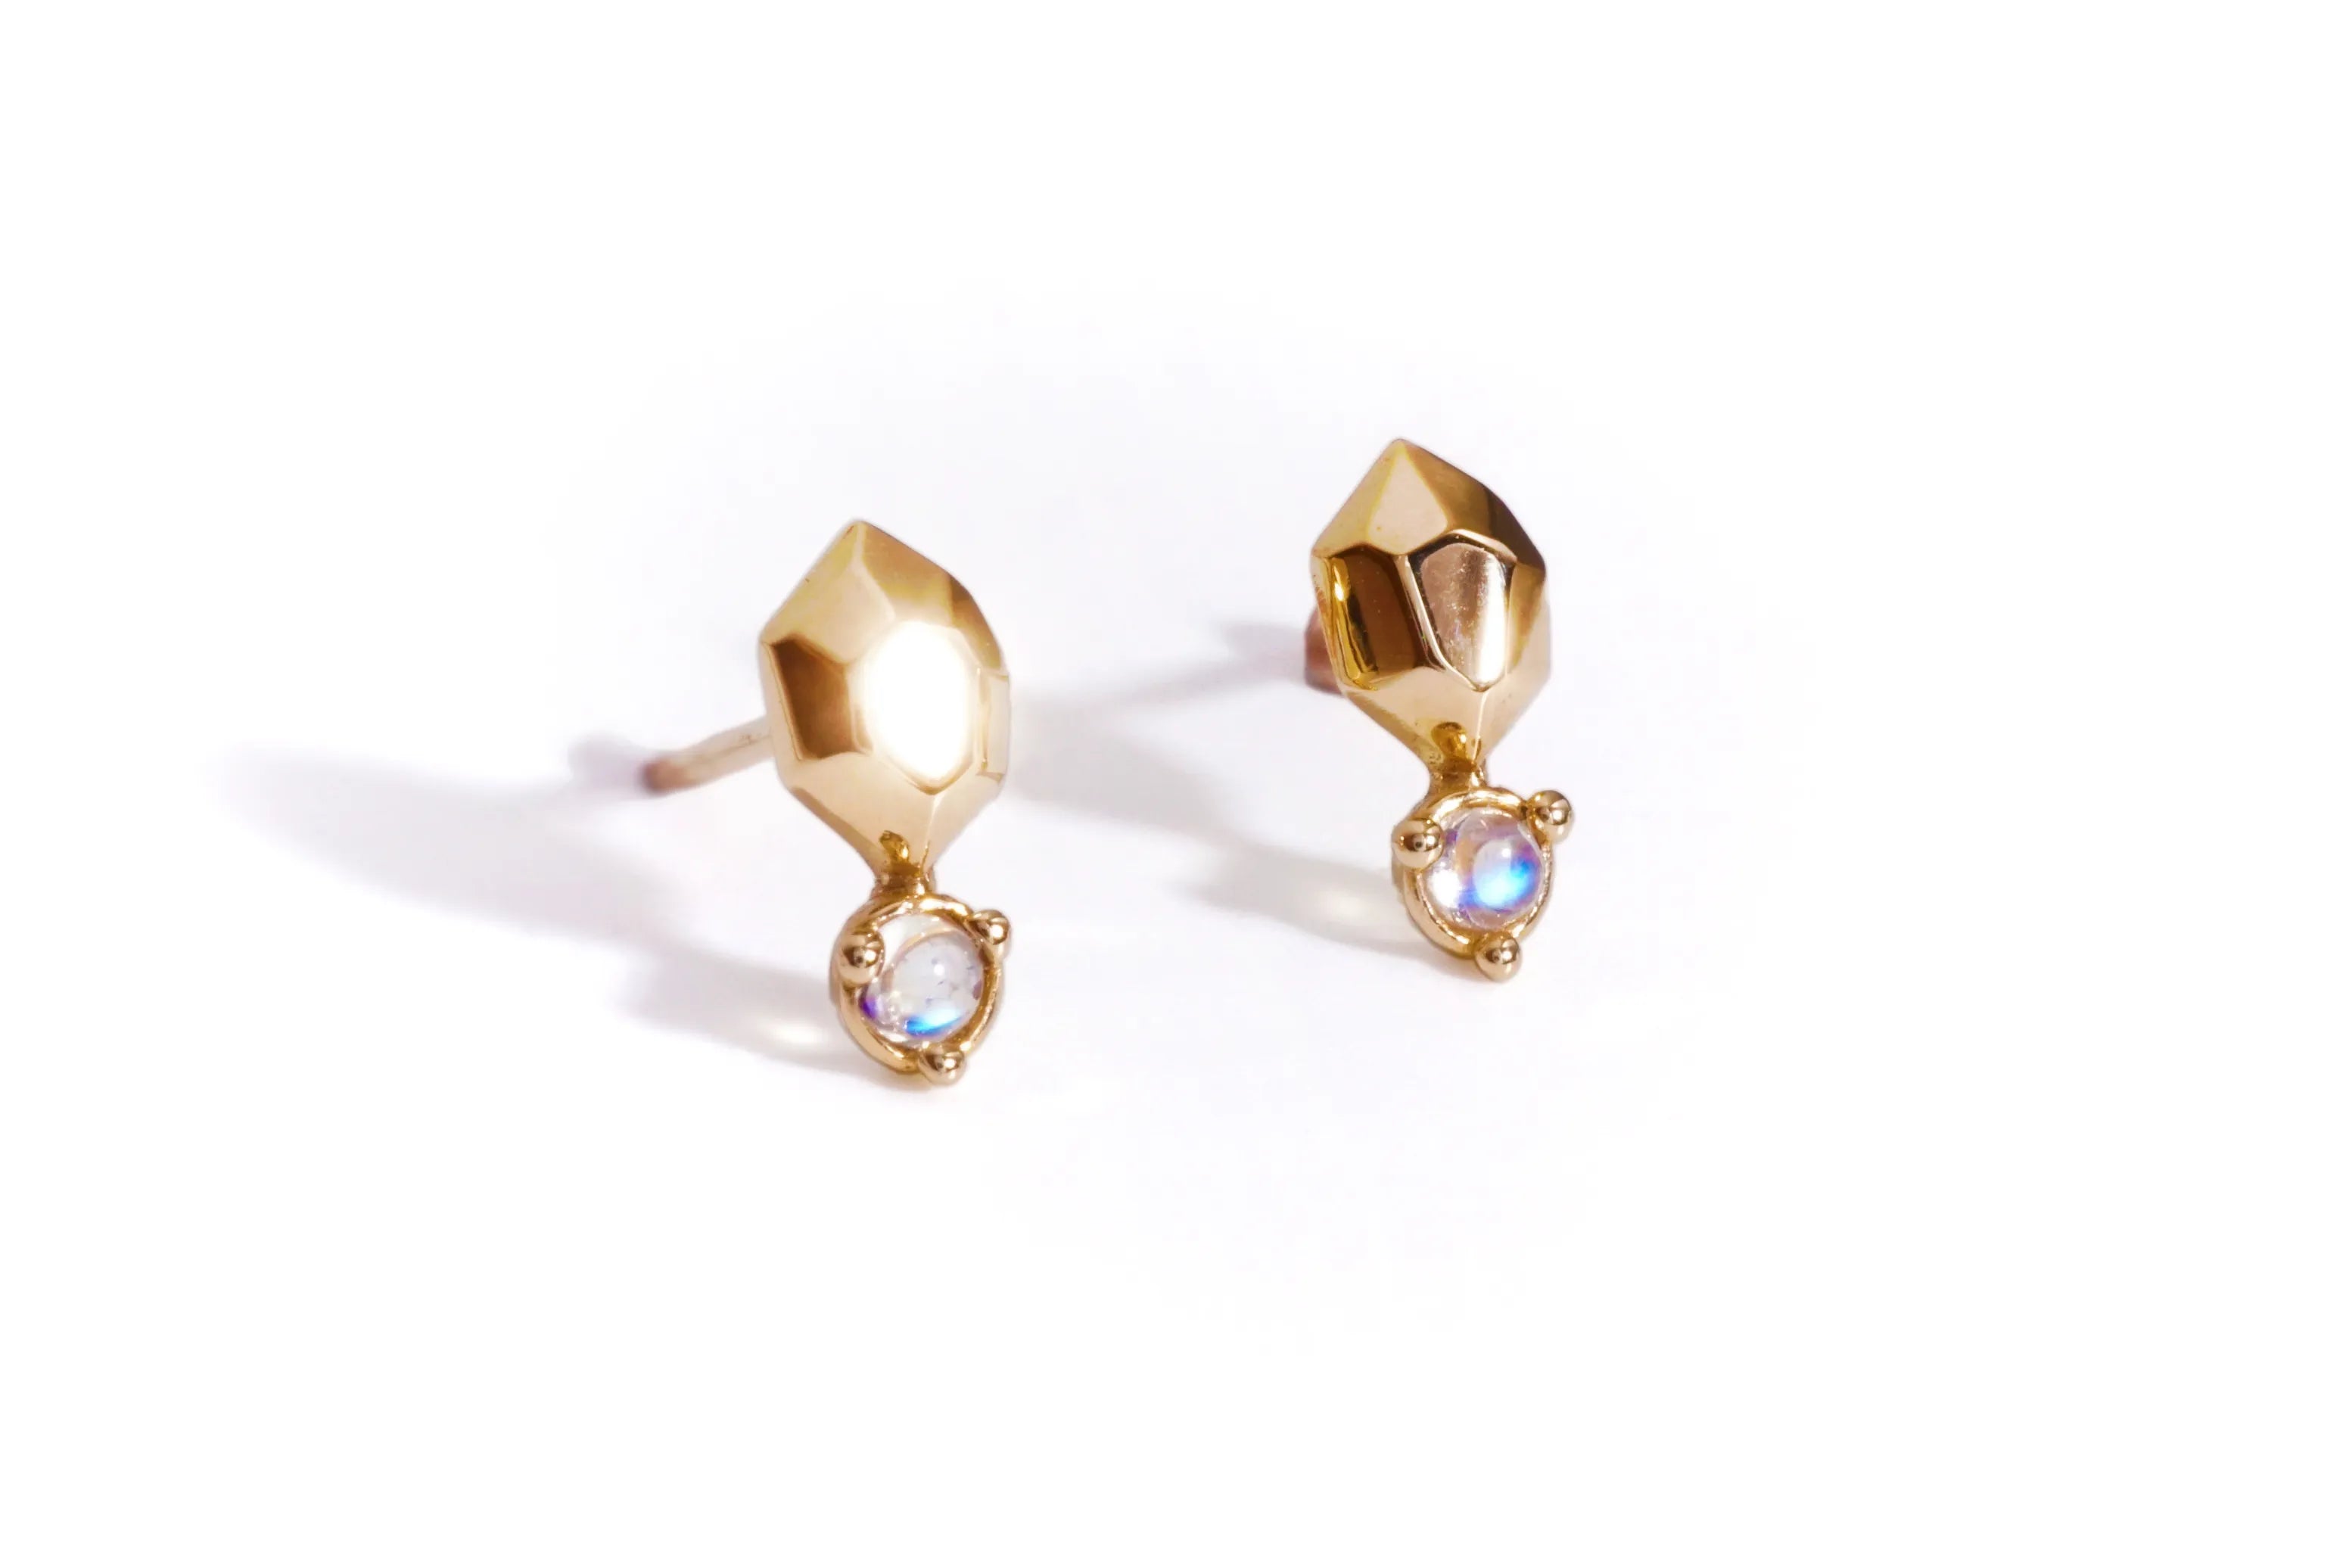 Chia Jewelry gem stones earrings design collection. 14kt gold moonstone stud earrings for women